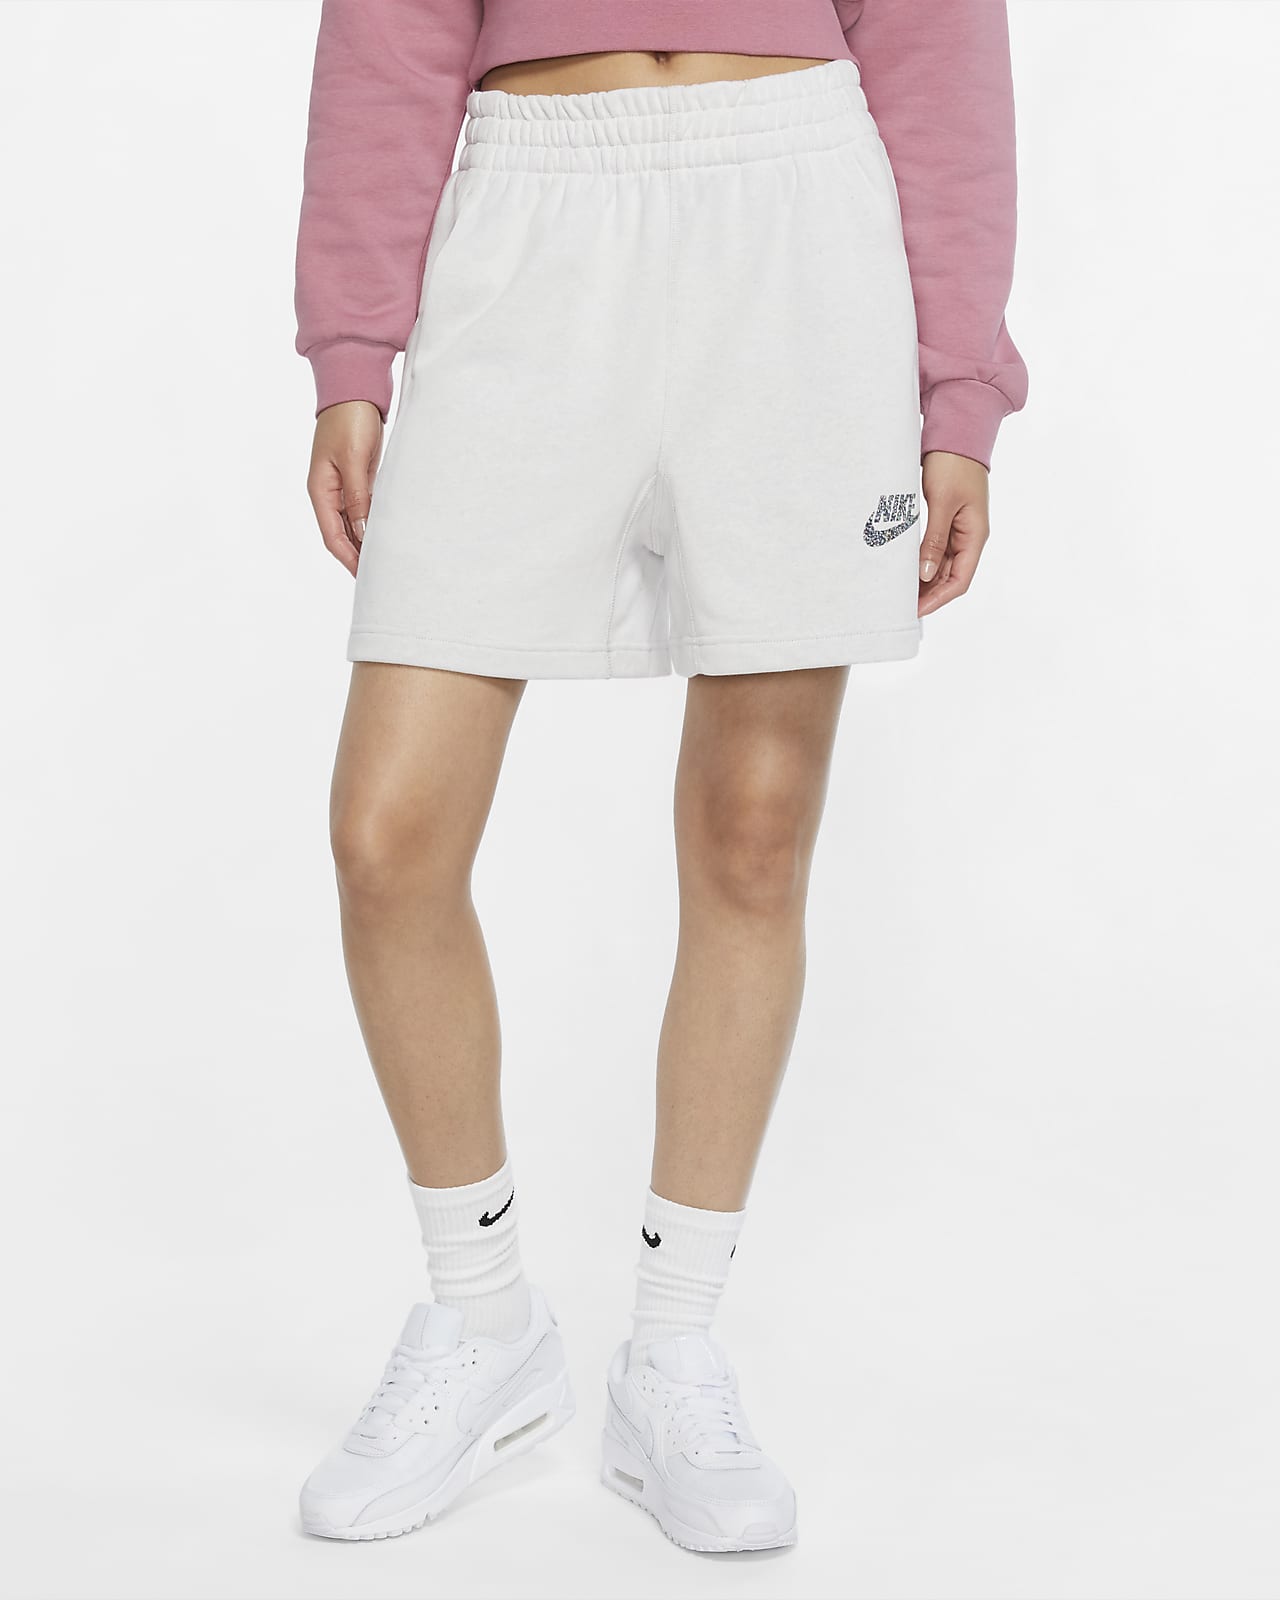 Nike Sportswear Women's Shorts. Nike SG